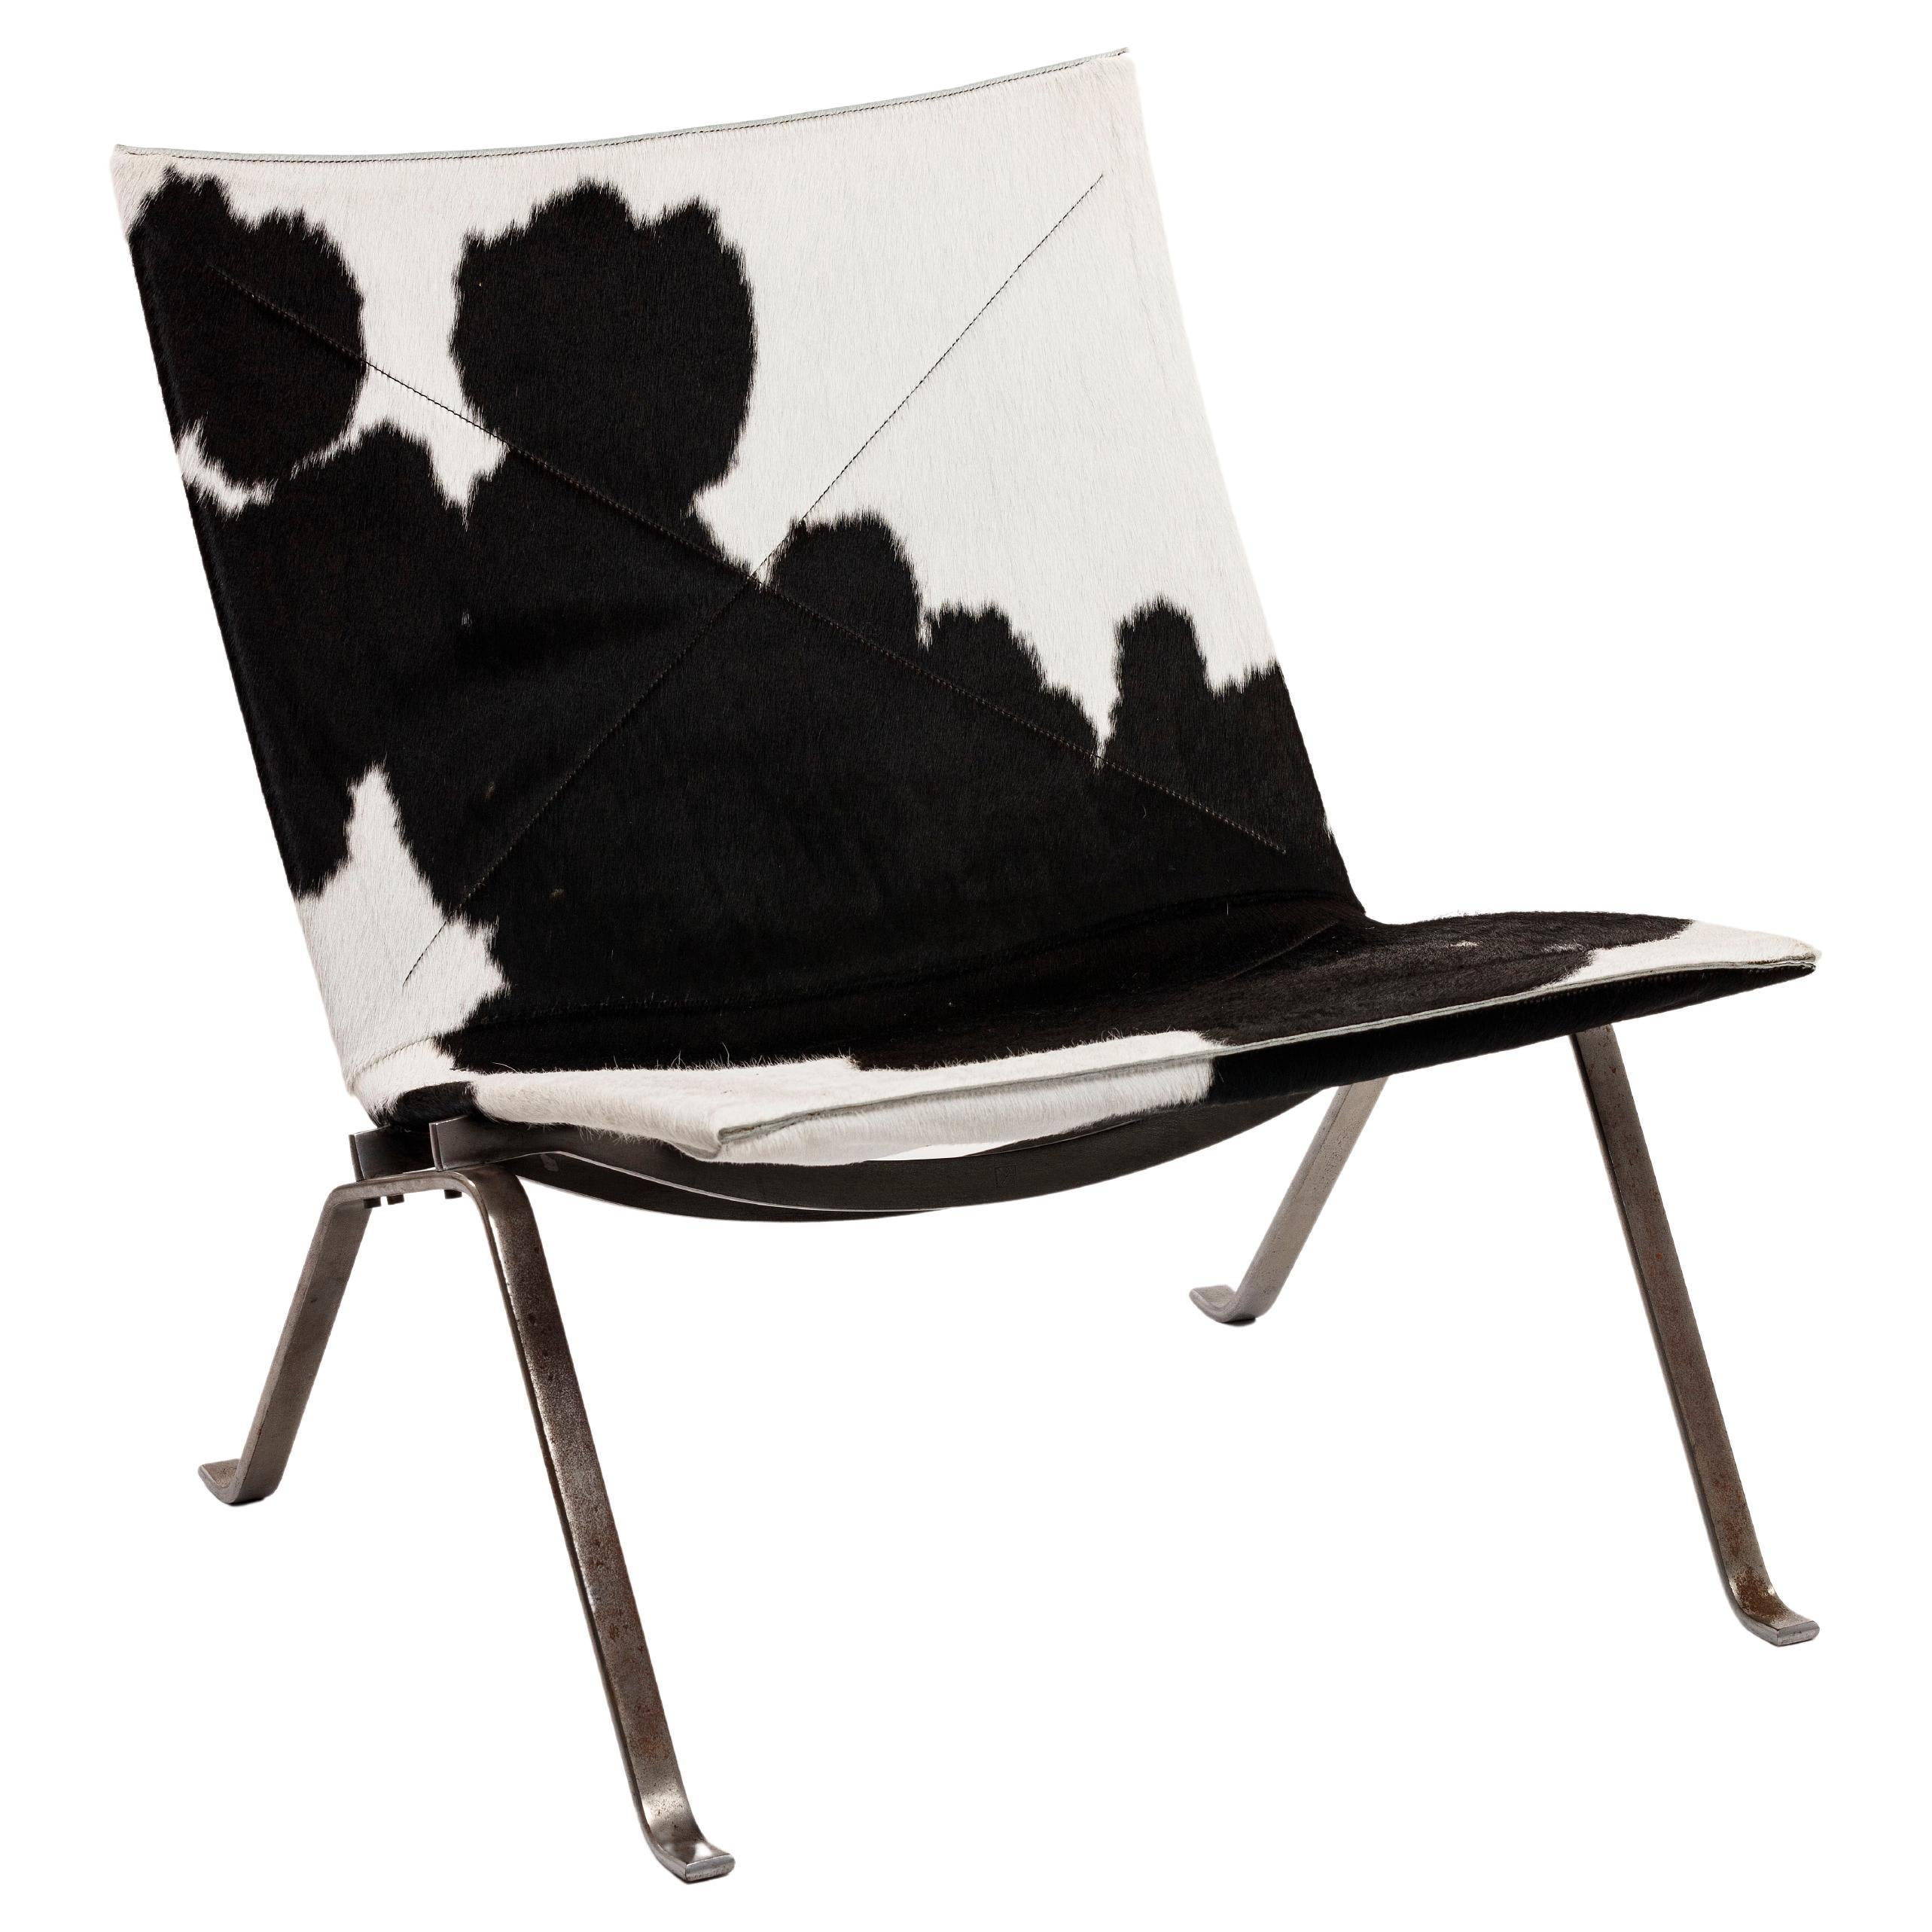 Poul Kjærholm Iconic PK 22 Chair reupholstered in Cowhide, E. Kold Christensen 2 en vente